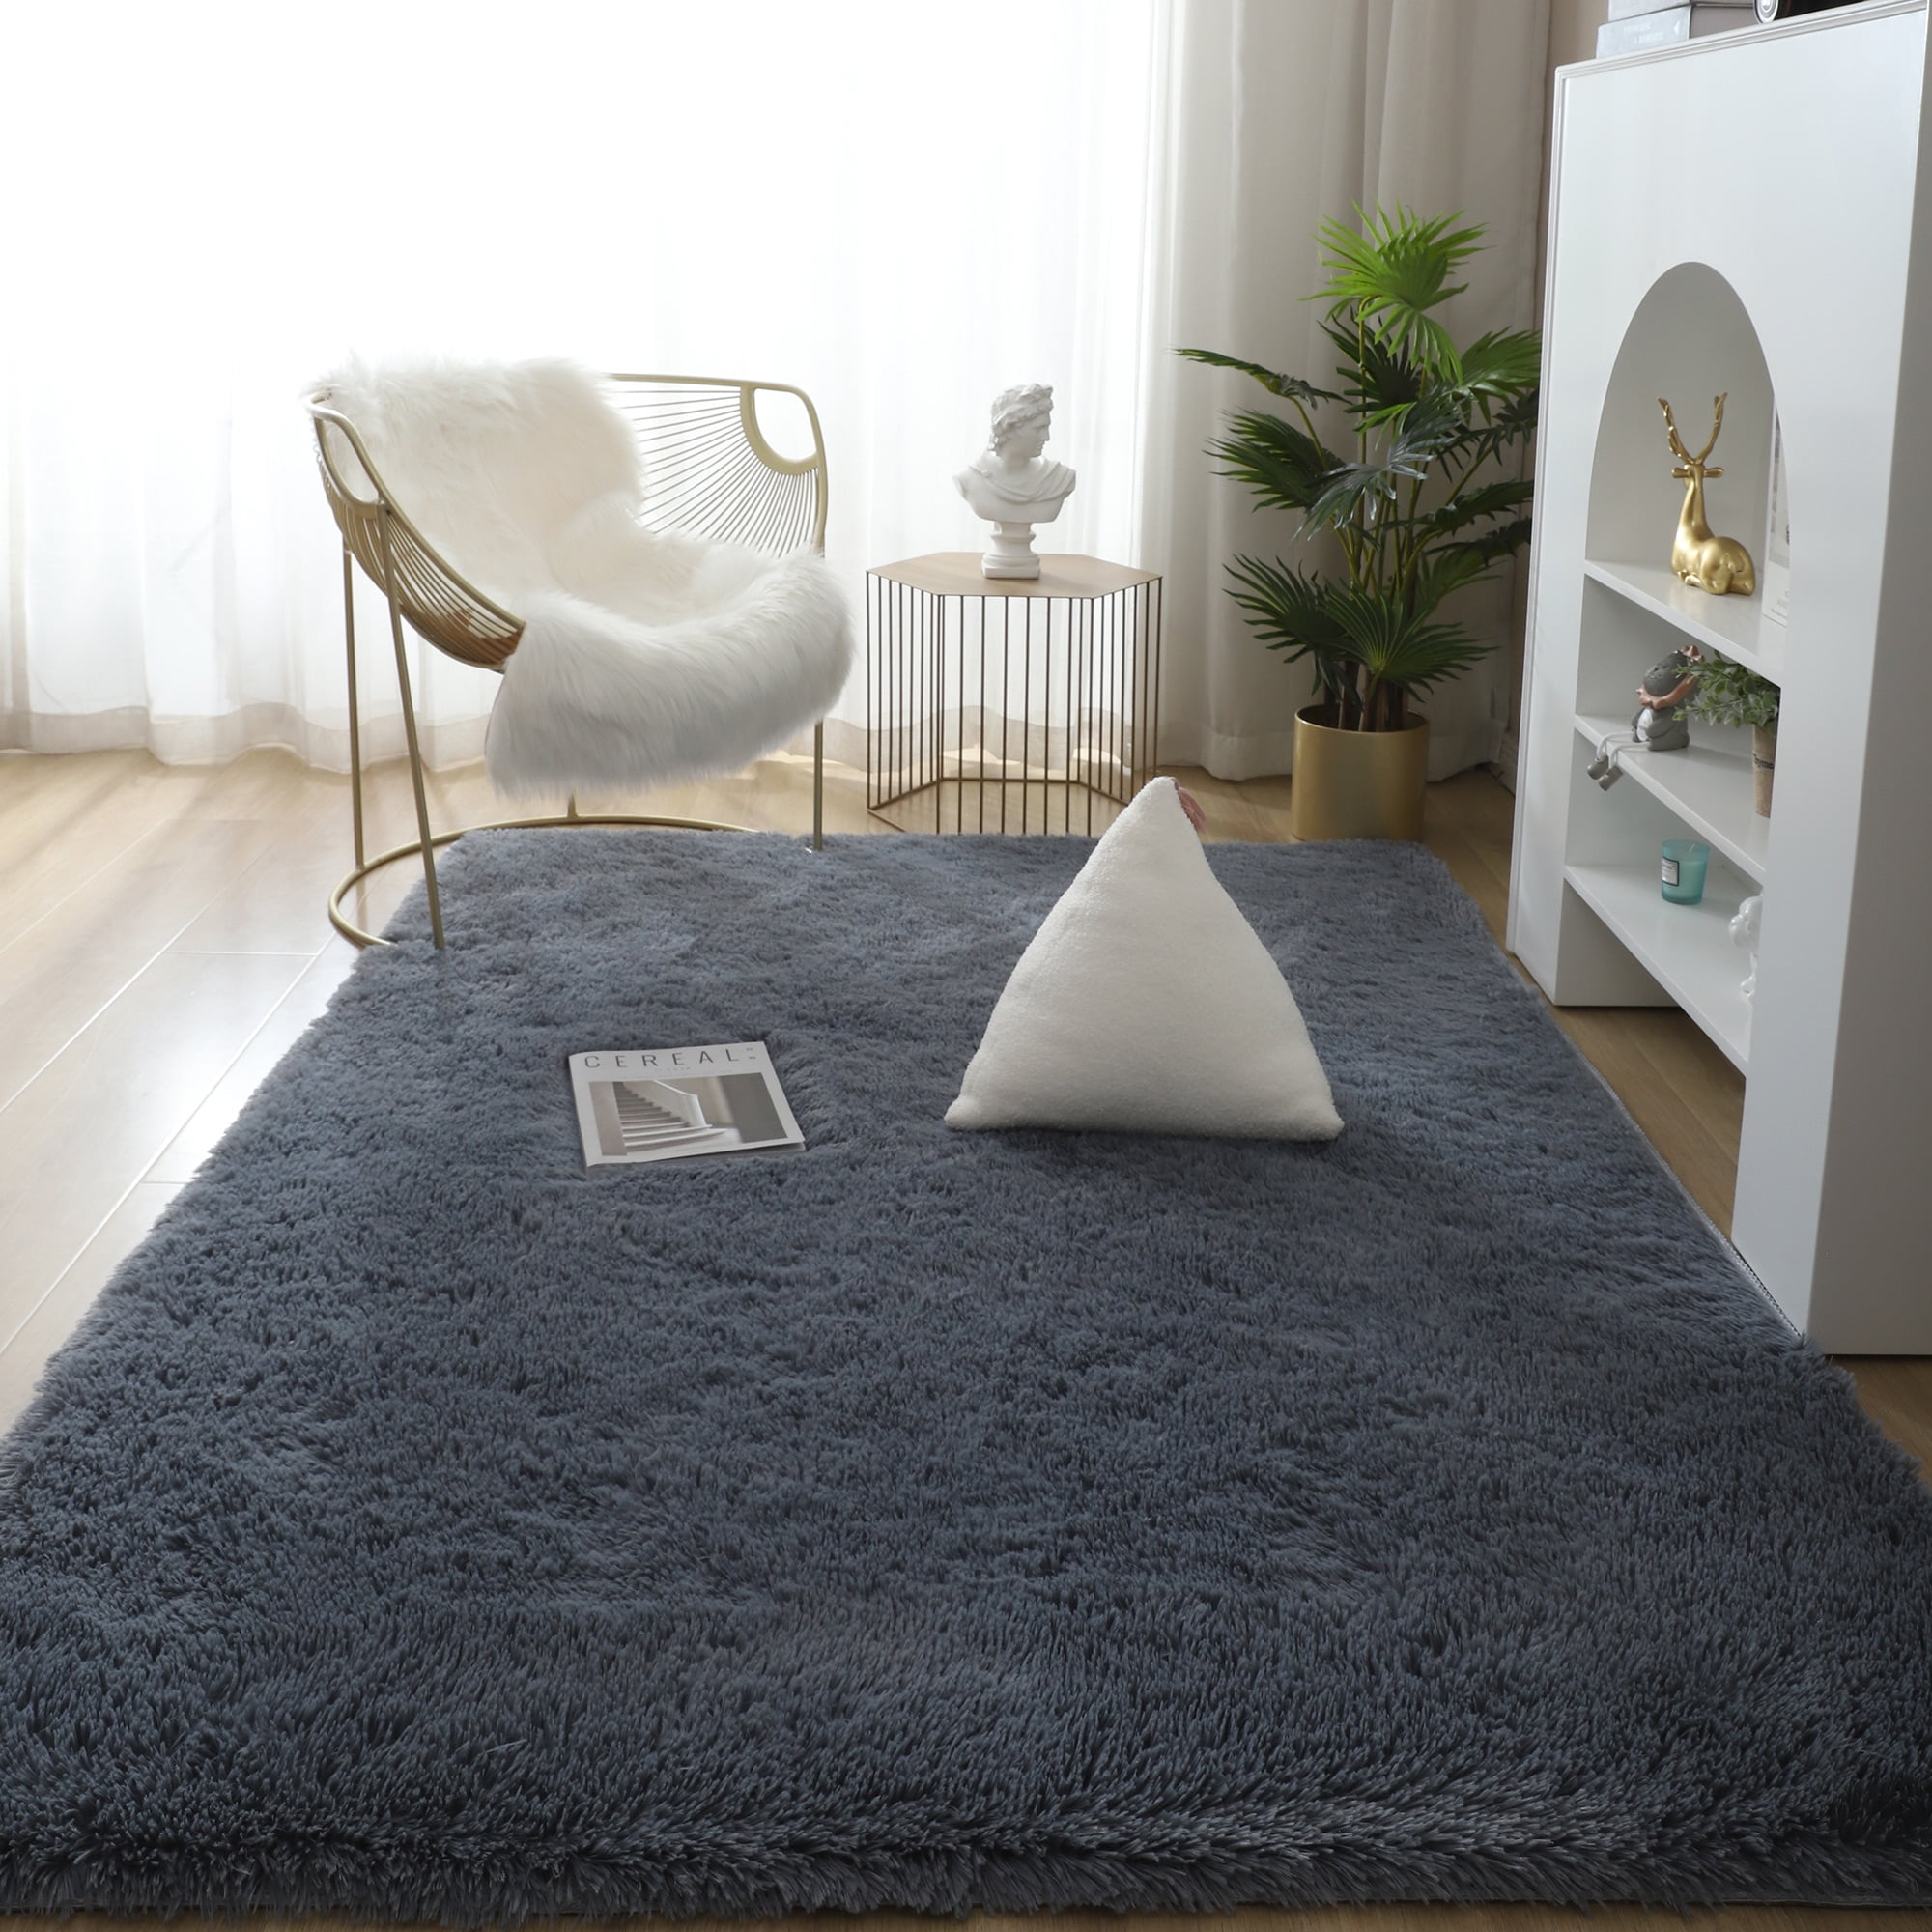 Faux Fur Sheepskin Area Rugs Fluffy Yoga Carpet Living Room Bedroom Floor Rug 